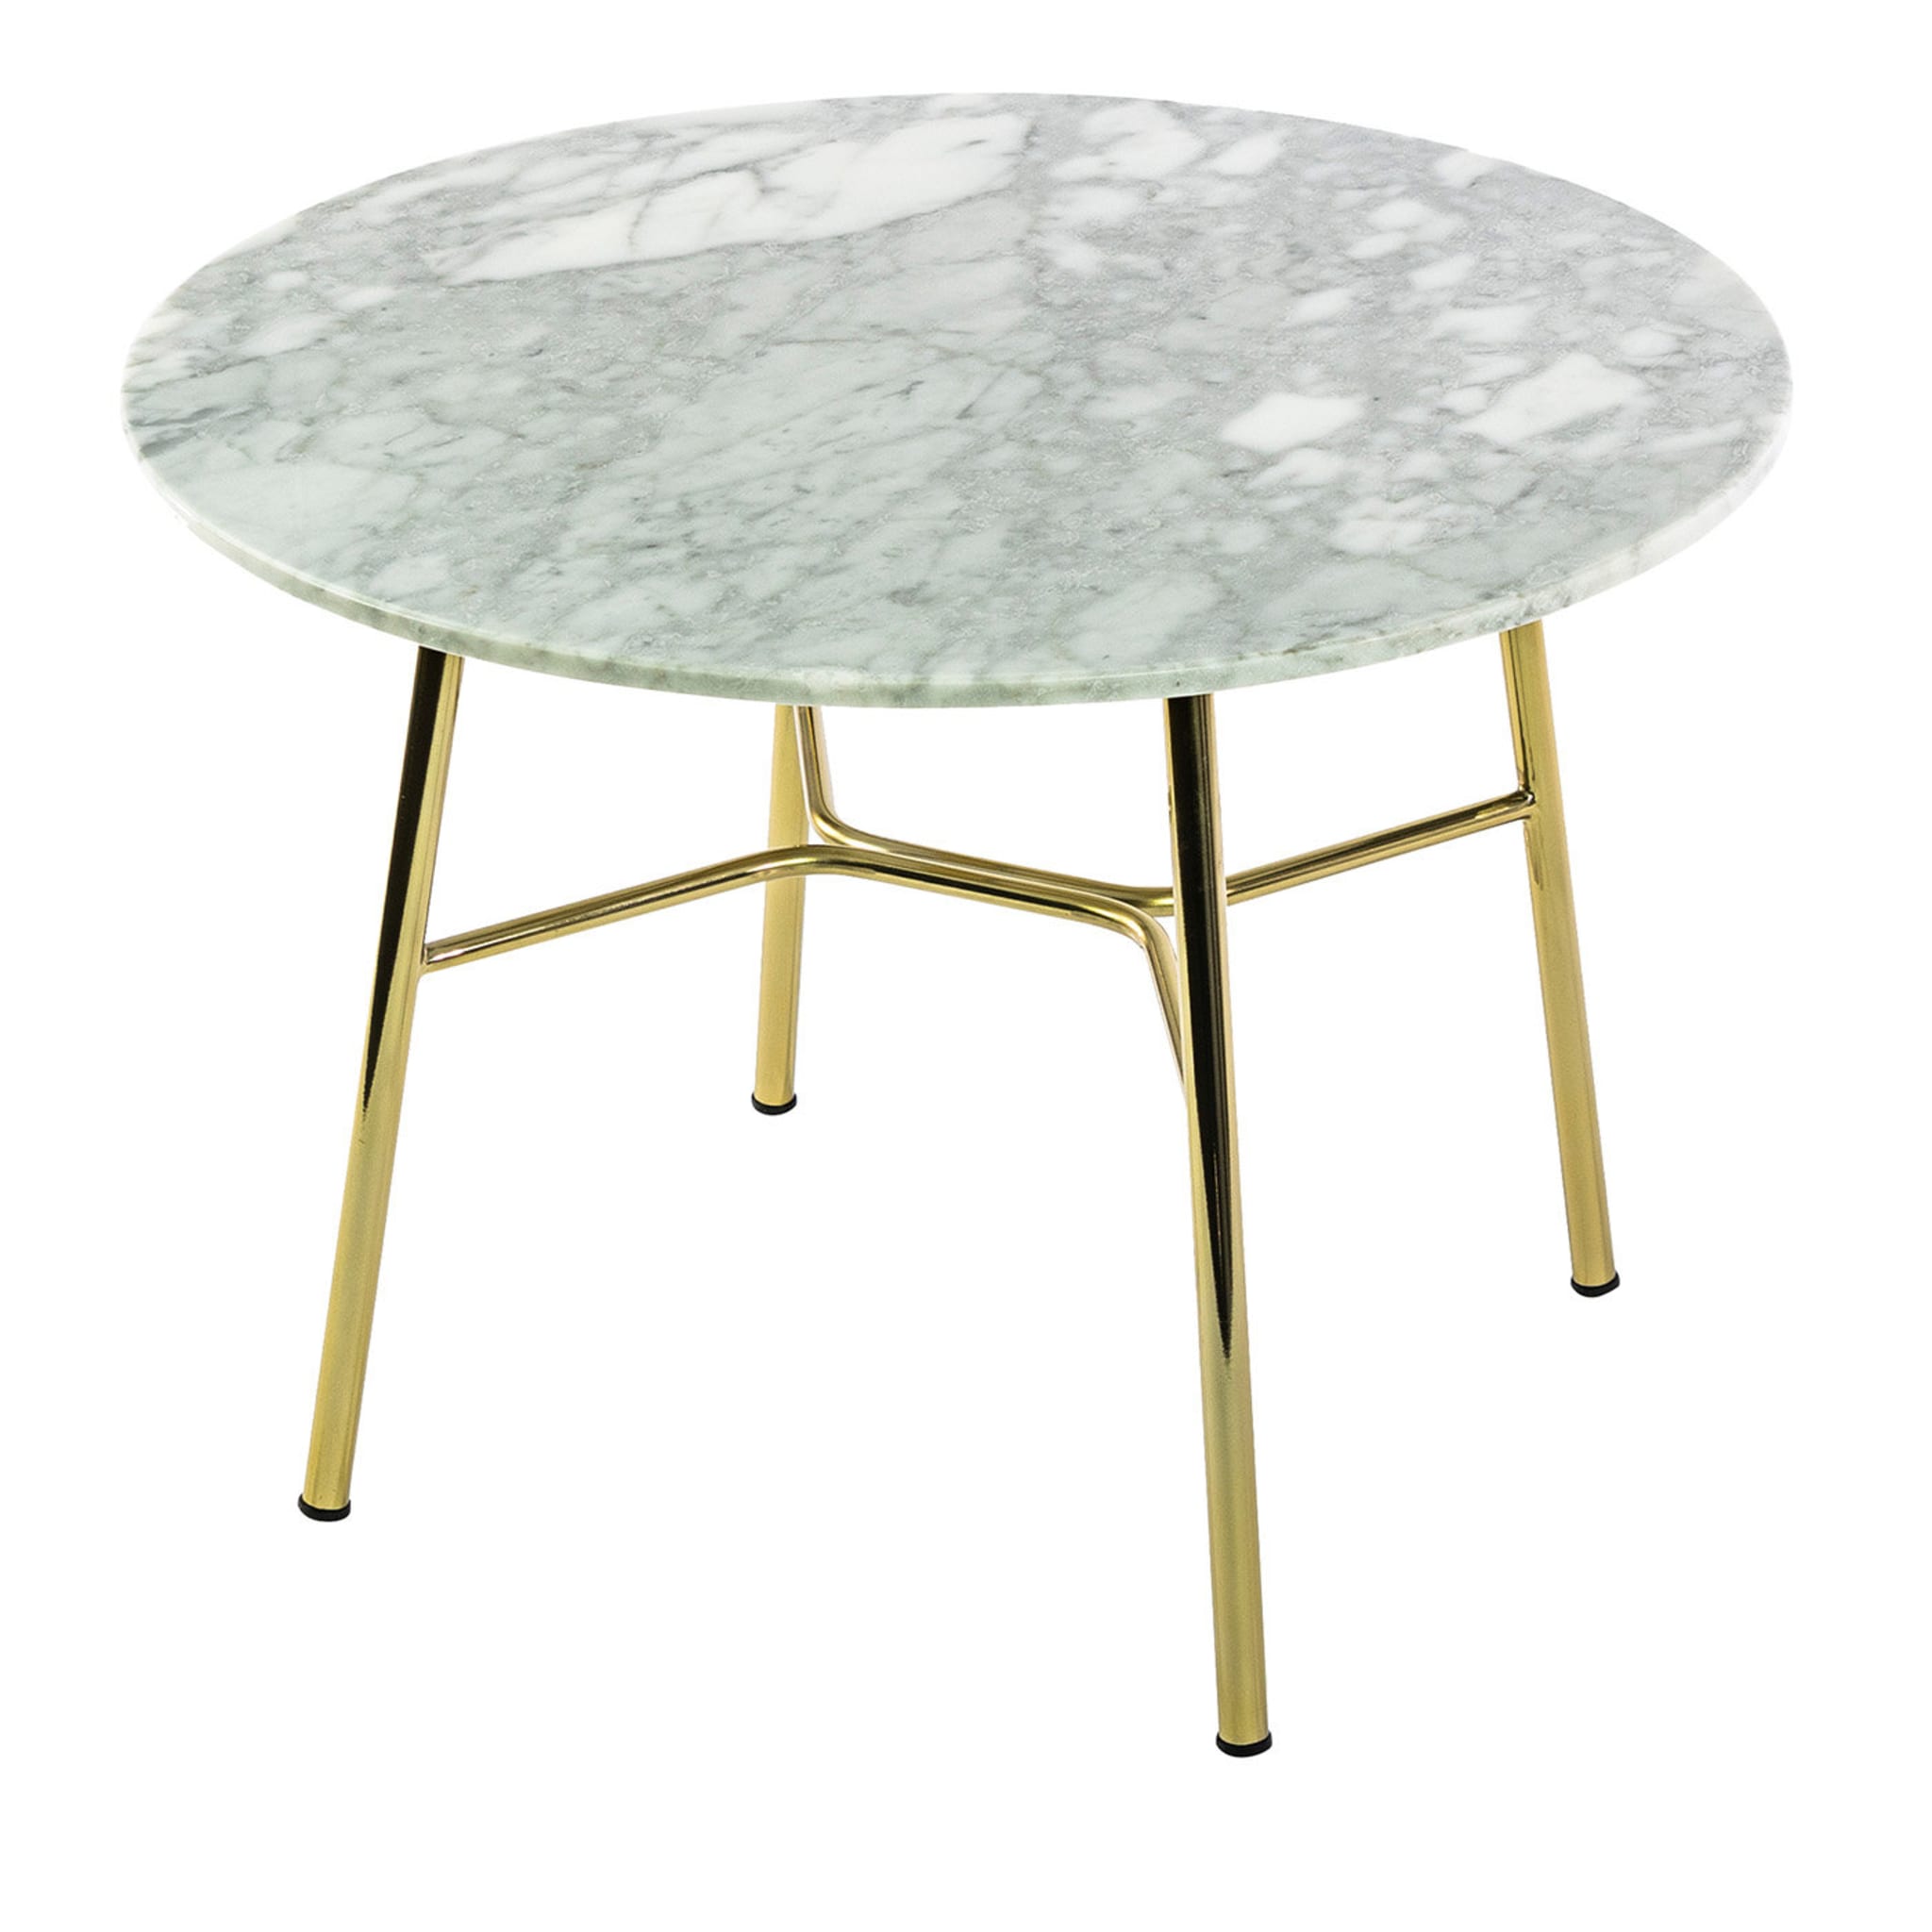 Yuki Round Side Table with White Carrara Top # 2 by Ep Studio - Main view